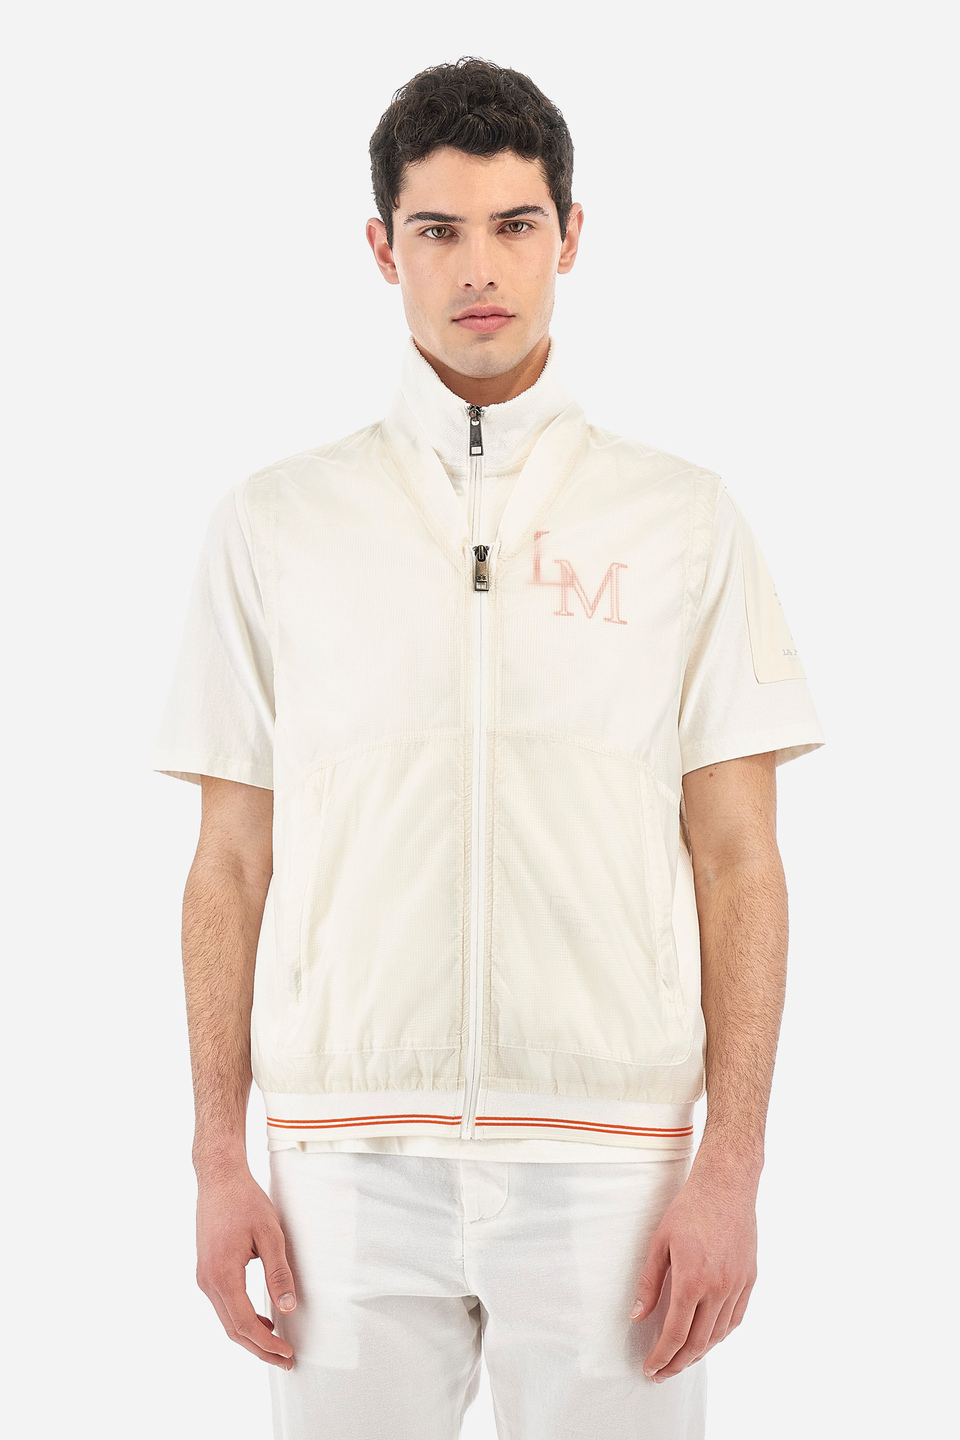 Men's vest with high collar and regular fit zip - Vermont | La Martina - Official Online Shop